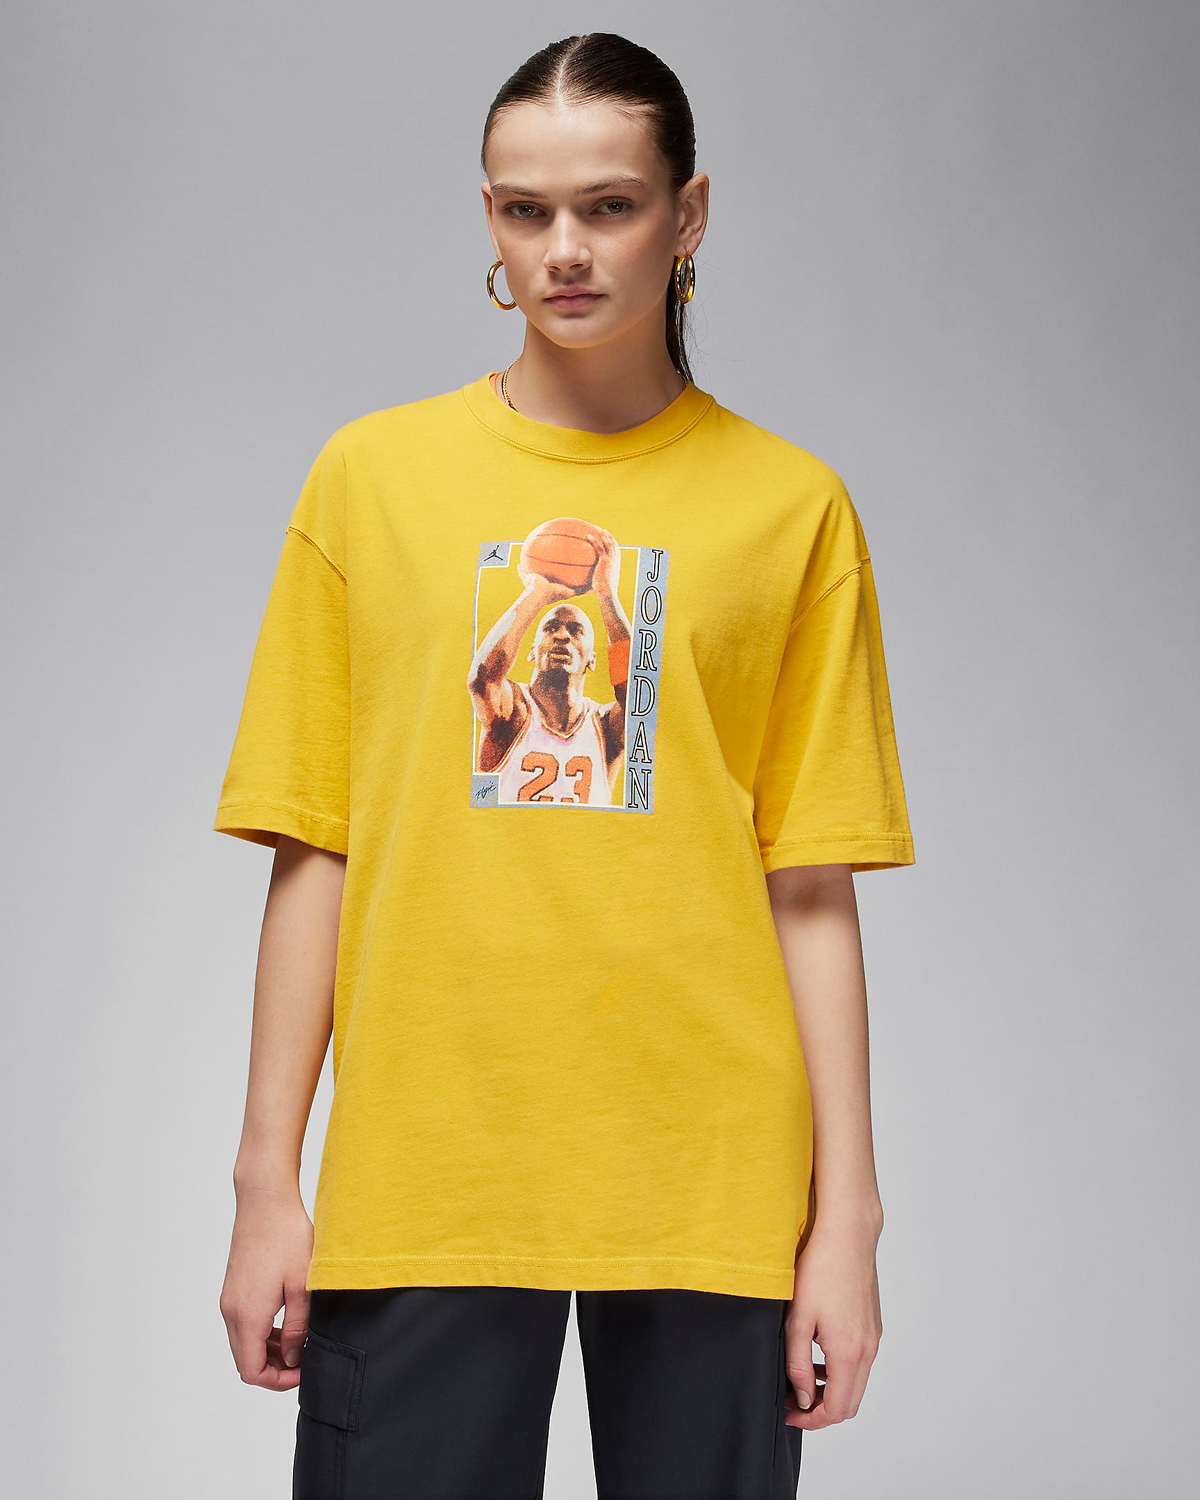 Jordan-Womens-Oversized-Graphic-T-Shirt-Yellow-Ochre-1